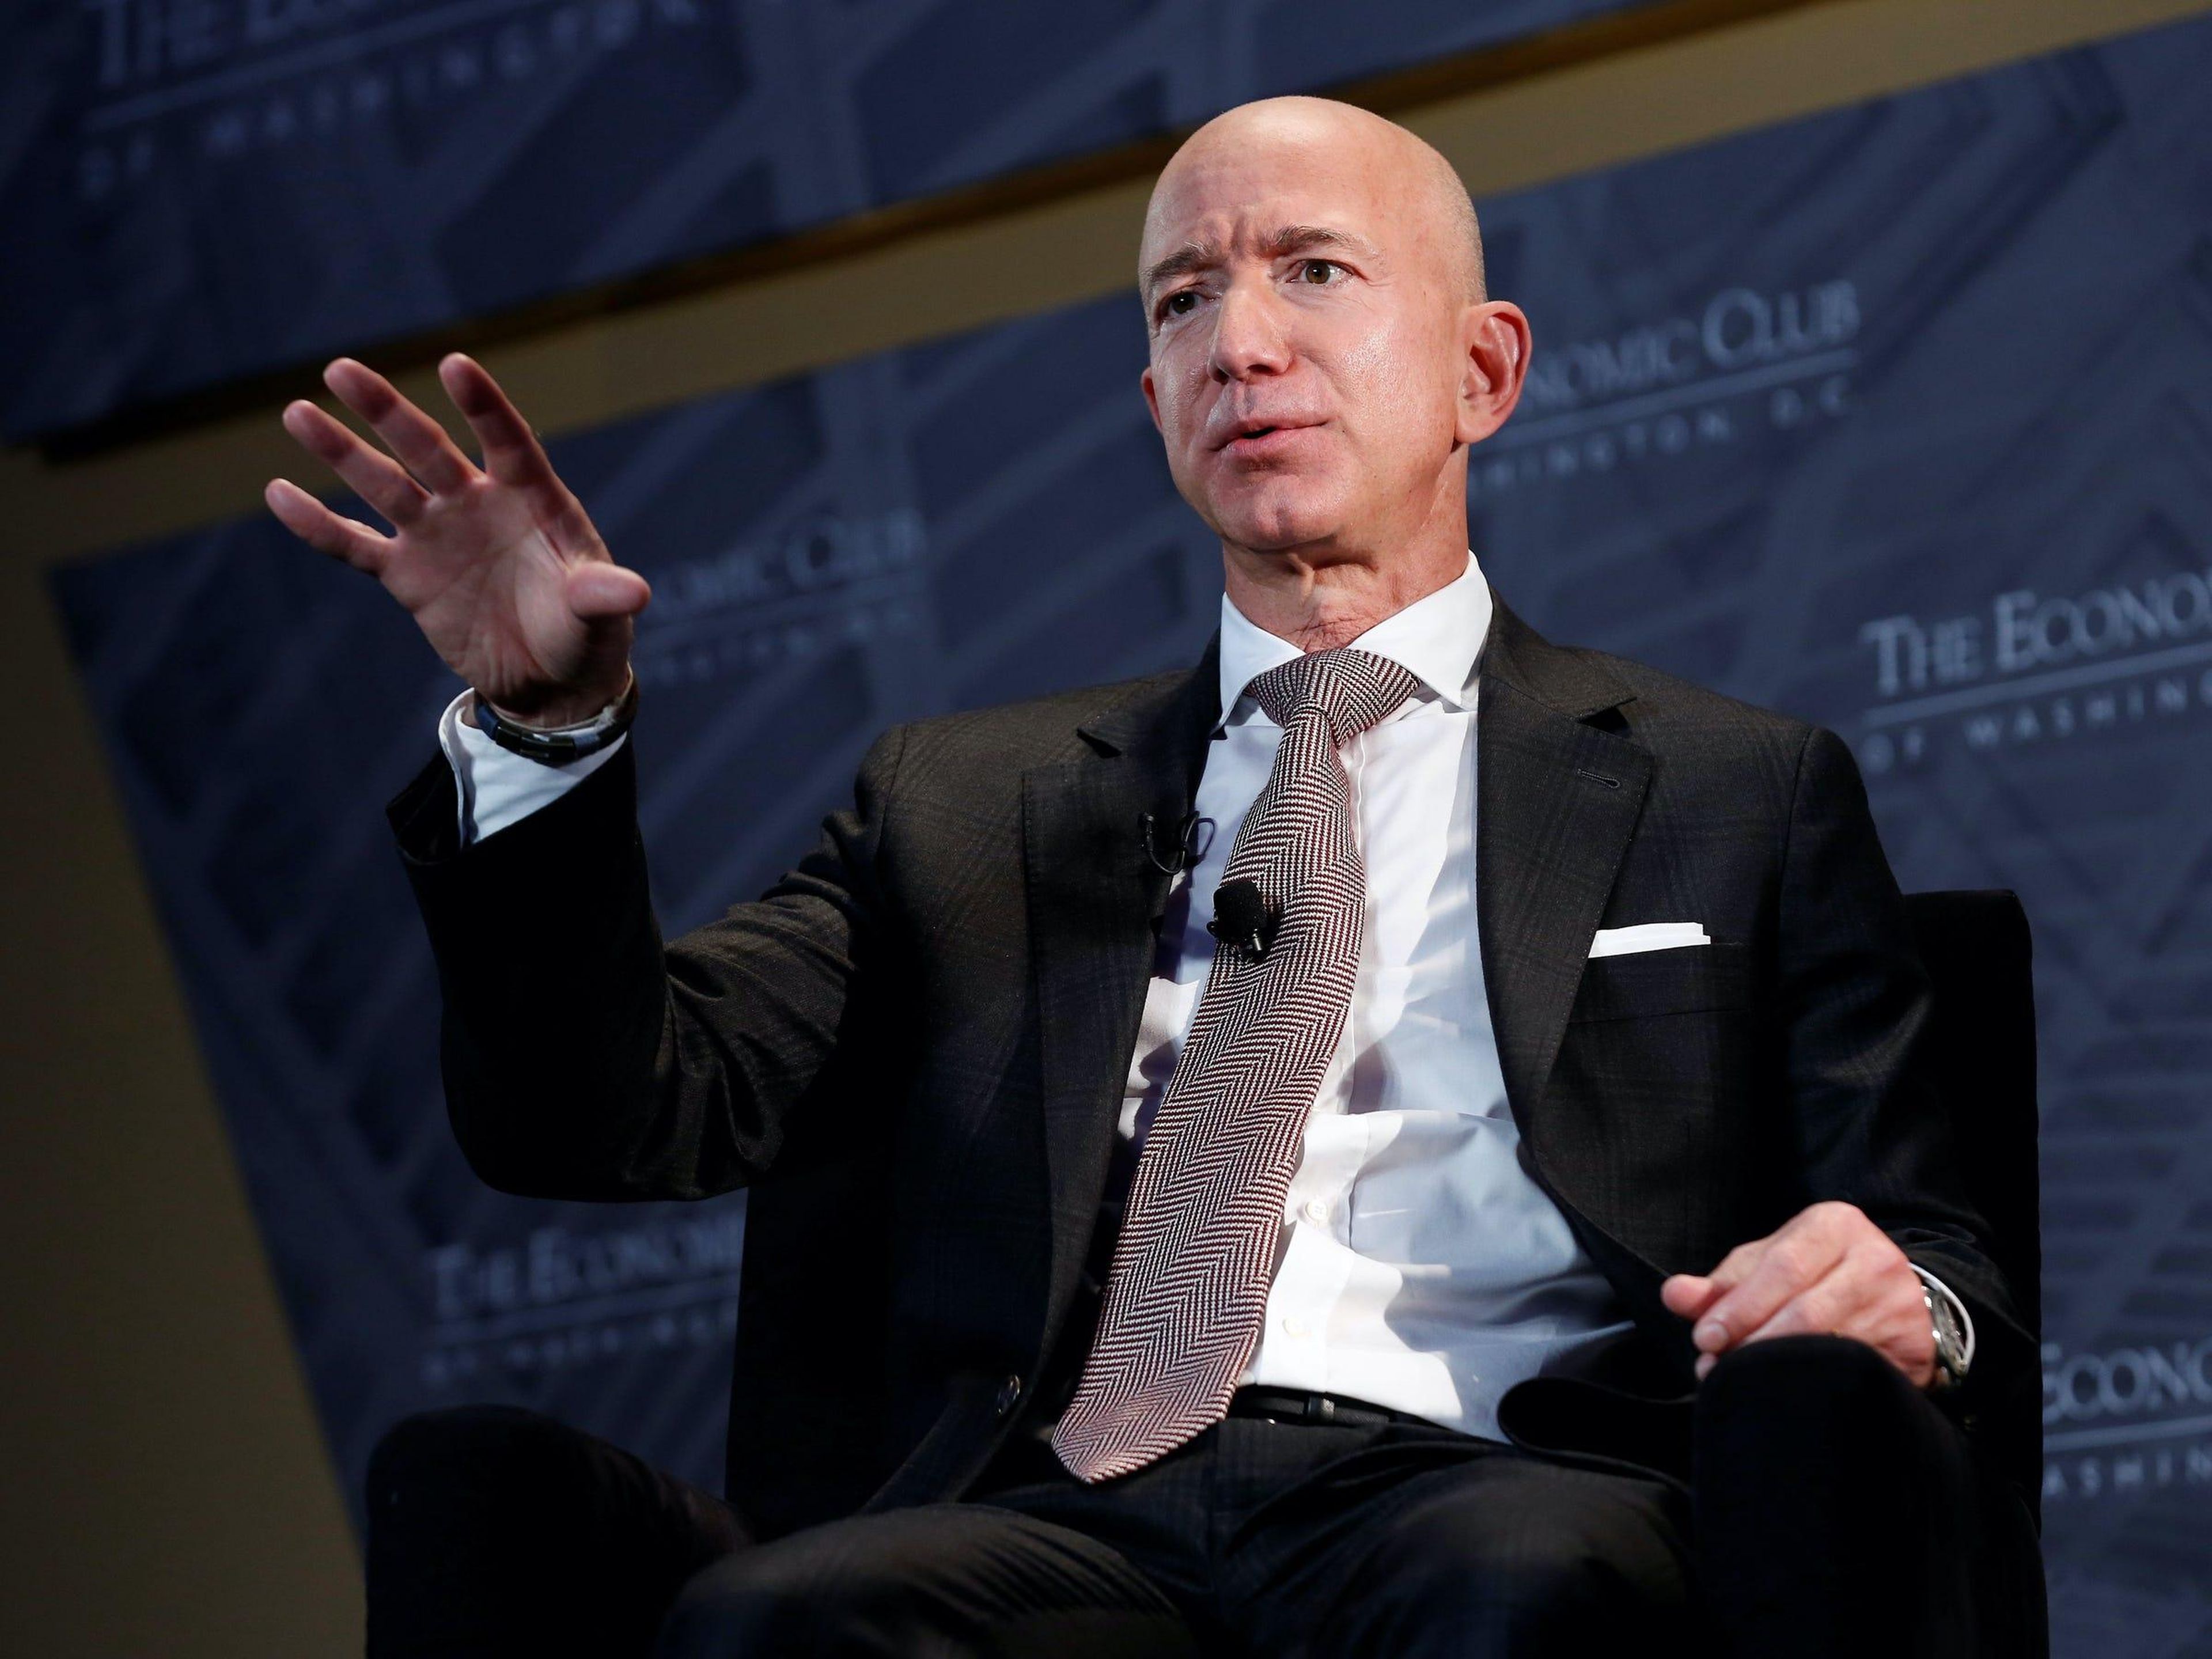 Amazon's CEO Jeff Bezos speaks at an event in Washington.